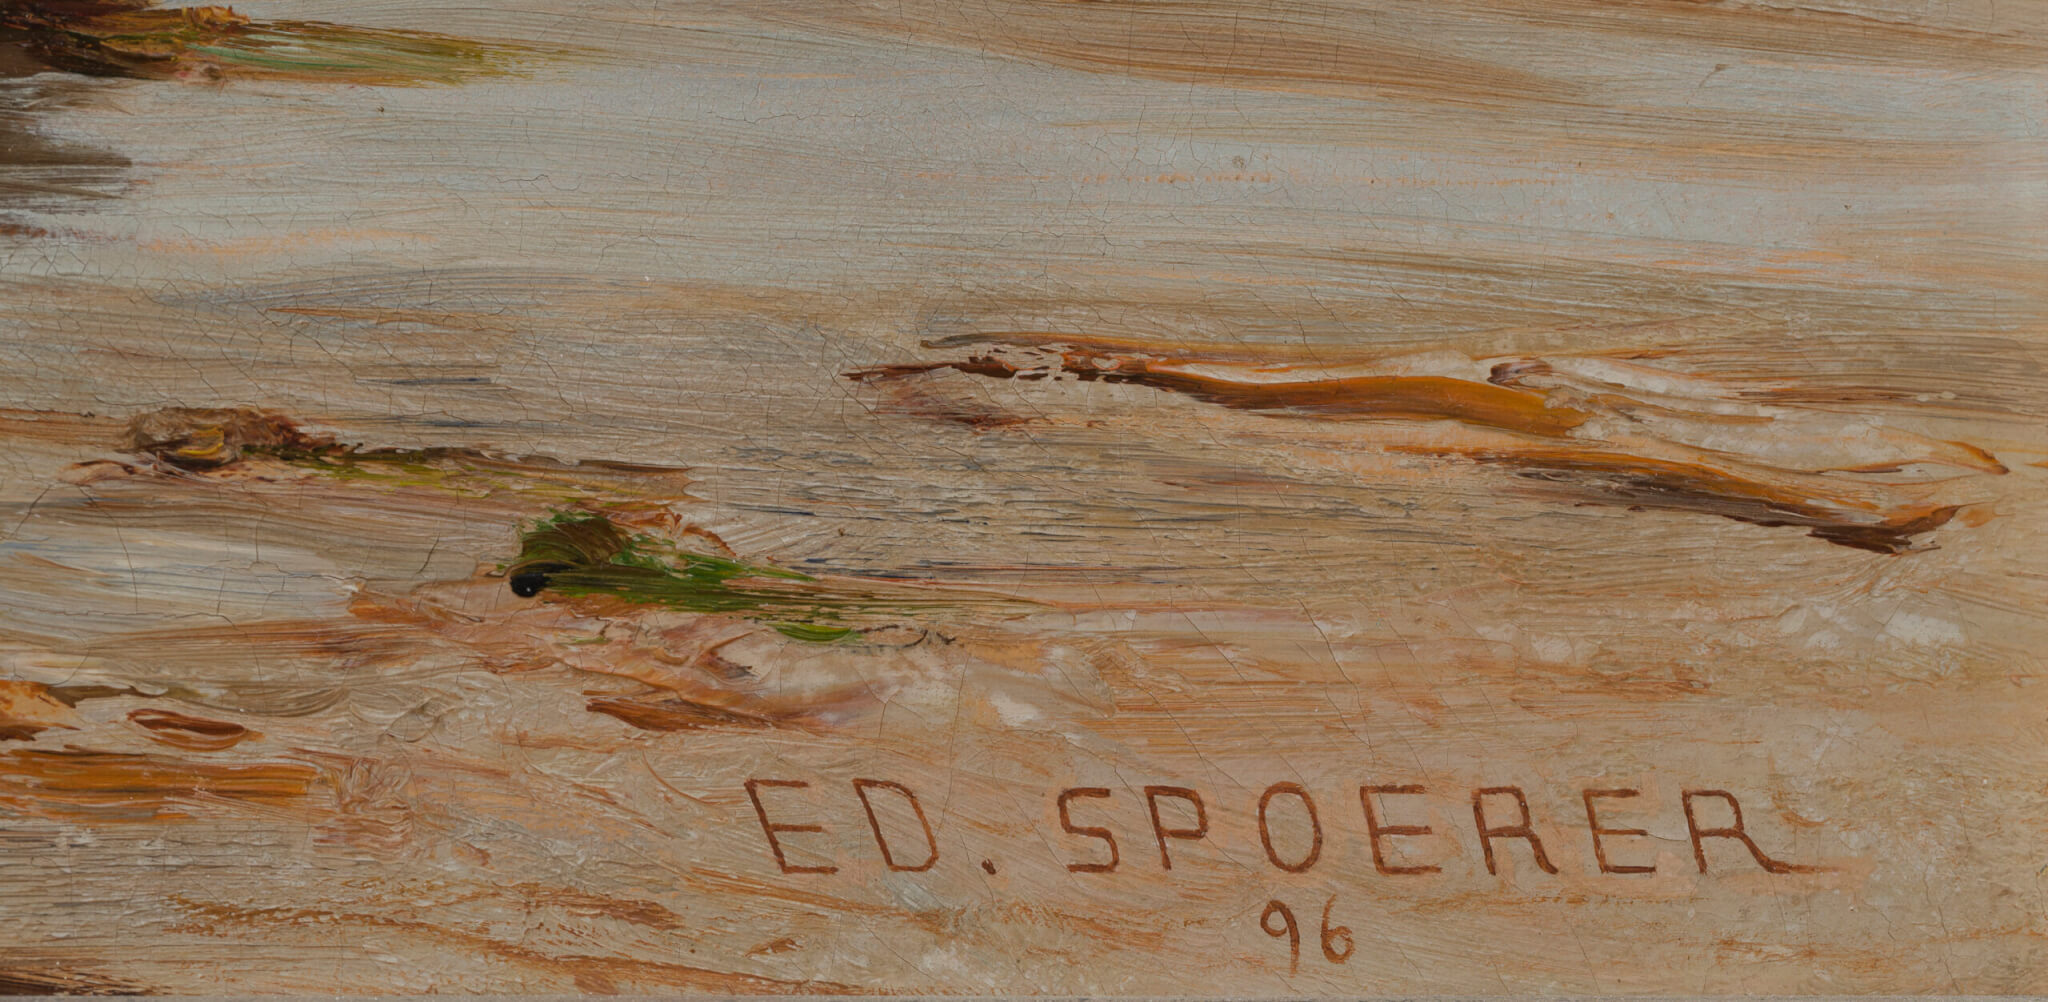 Eduard Spoerer “Bretannia rannavaade kalurite ja rannakarbi korjajatega”, 1896. 50,5 x 76,5 cm.